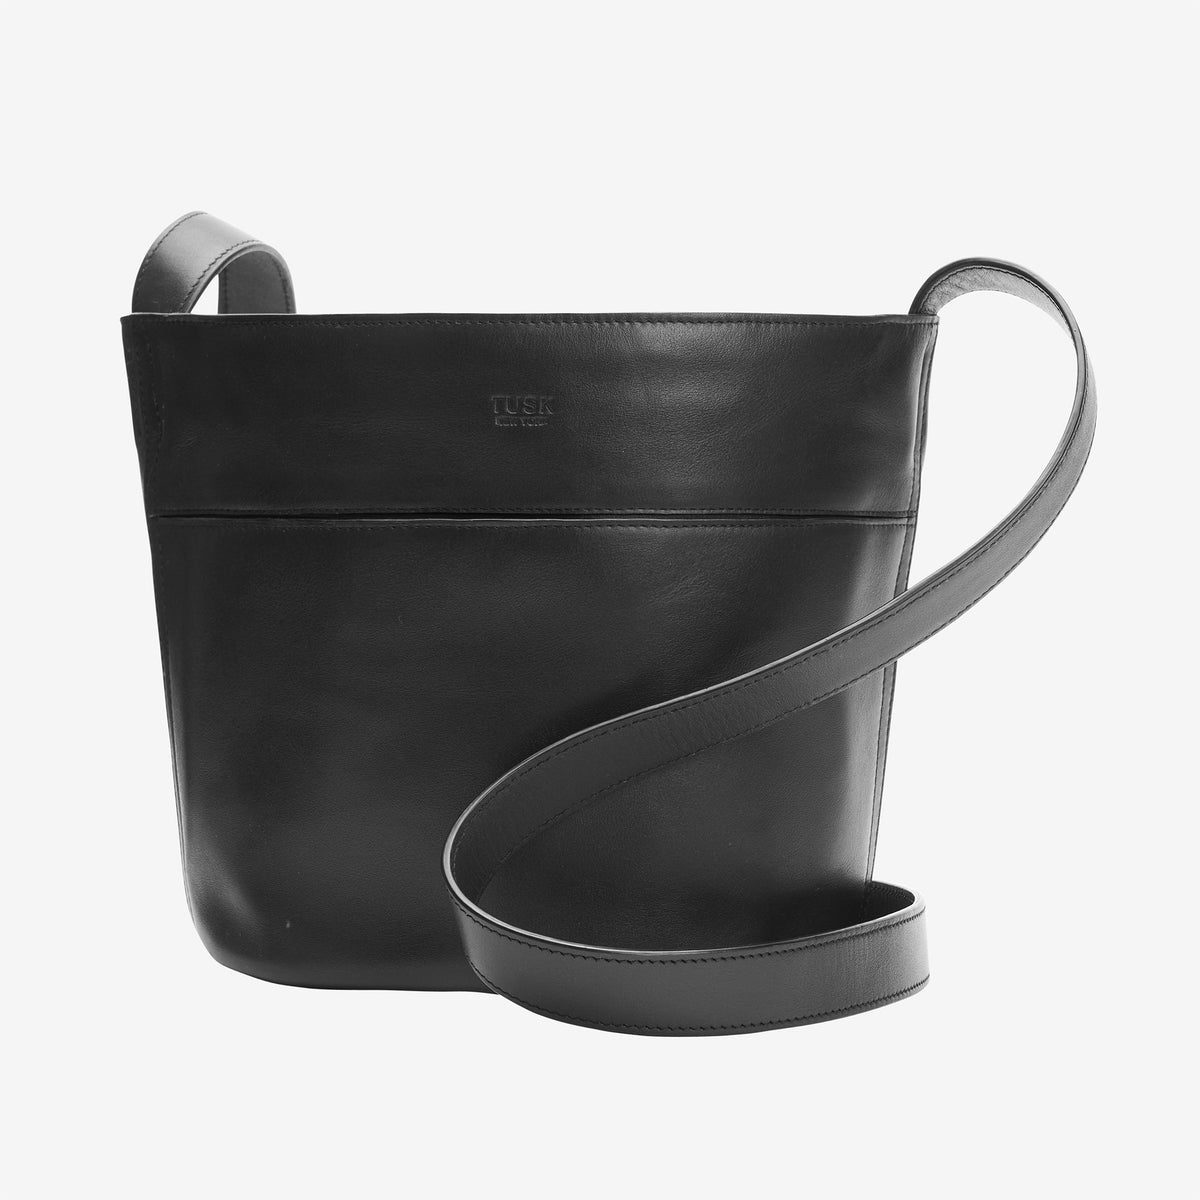    tusk-9925-leather-charu-small-bucket-bag-black-front